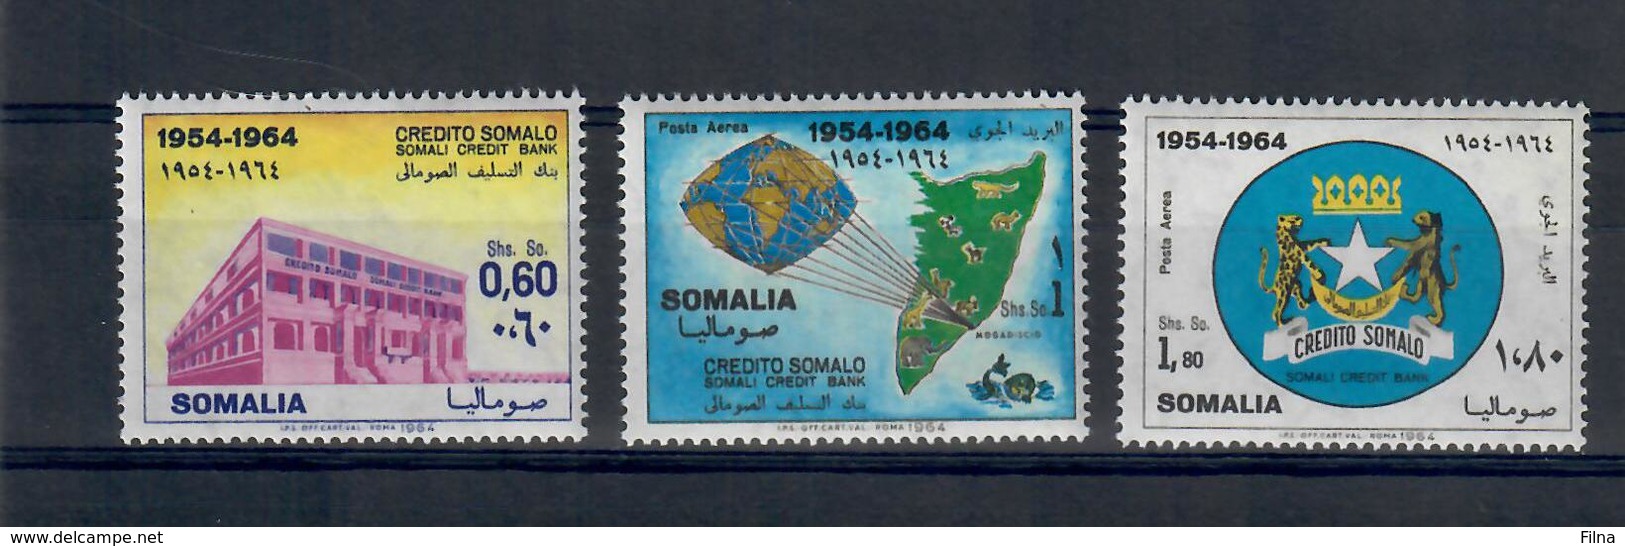 SOMALIA 1964 - 10 ANNI CREDITO SOMALO  - MNH ** - Somalië (1960-...)